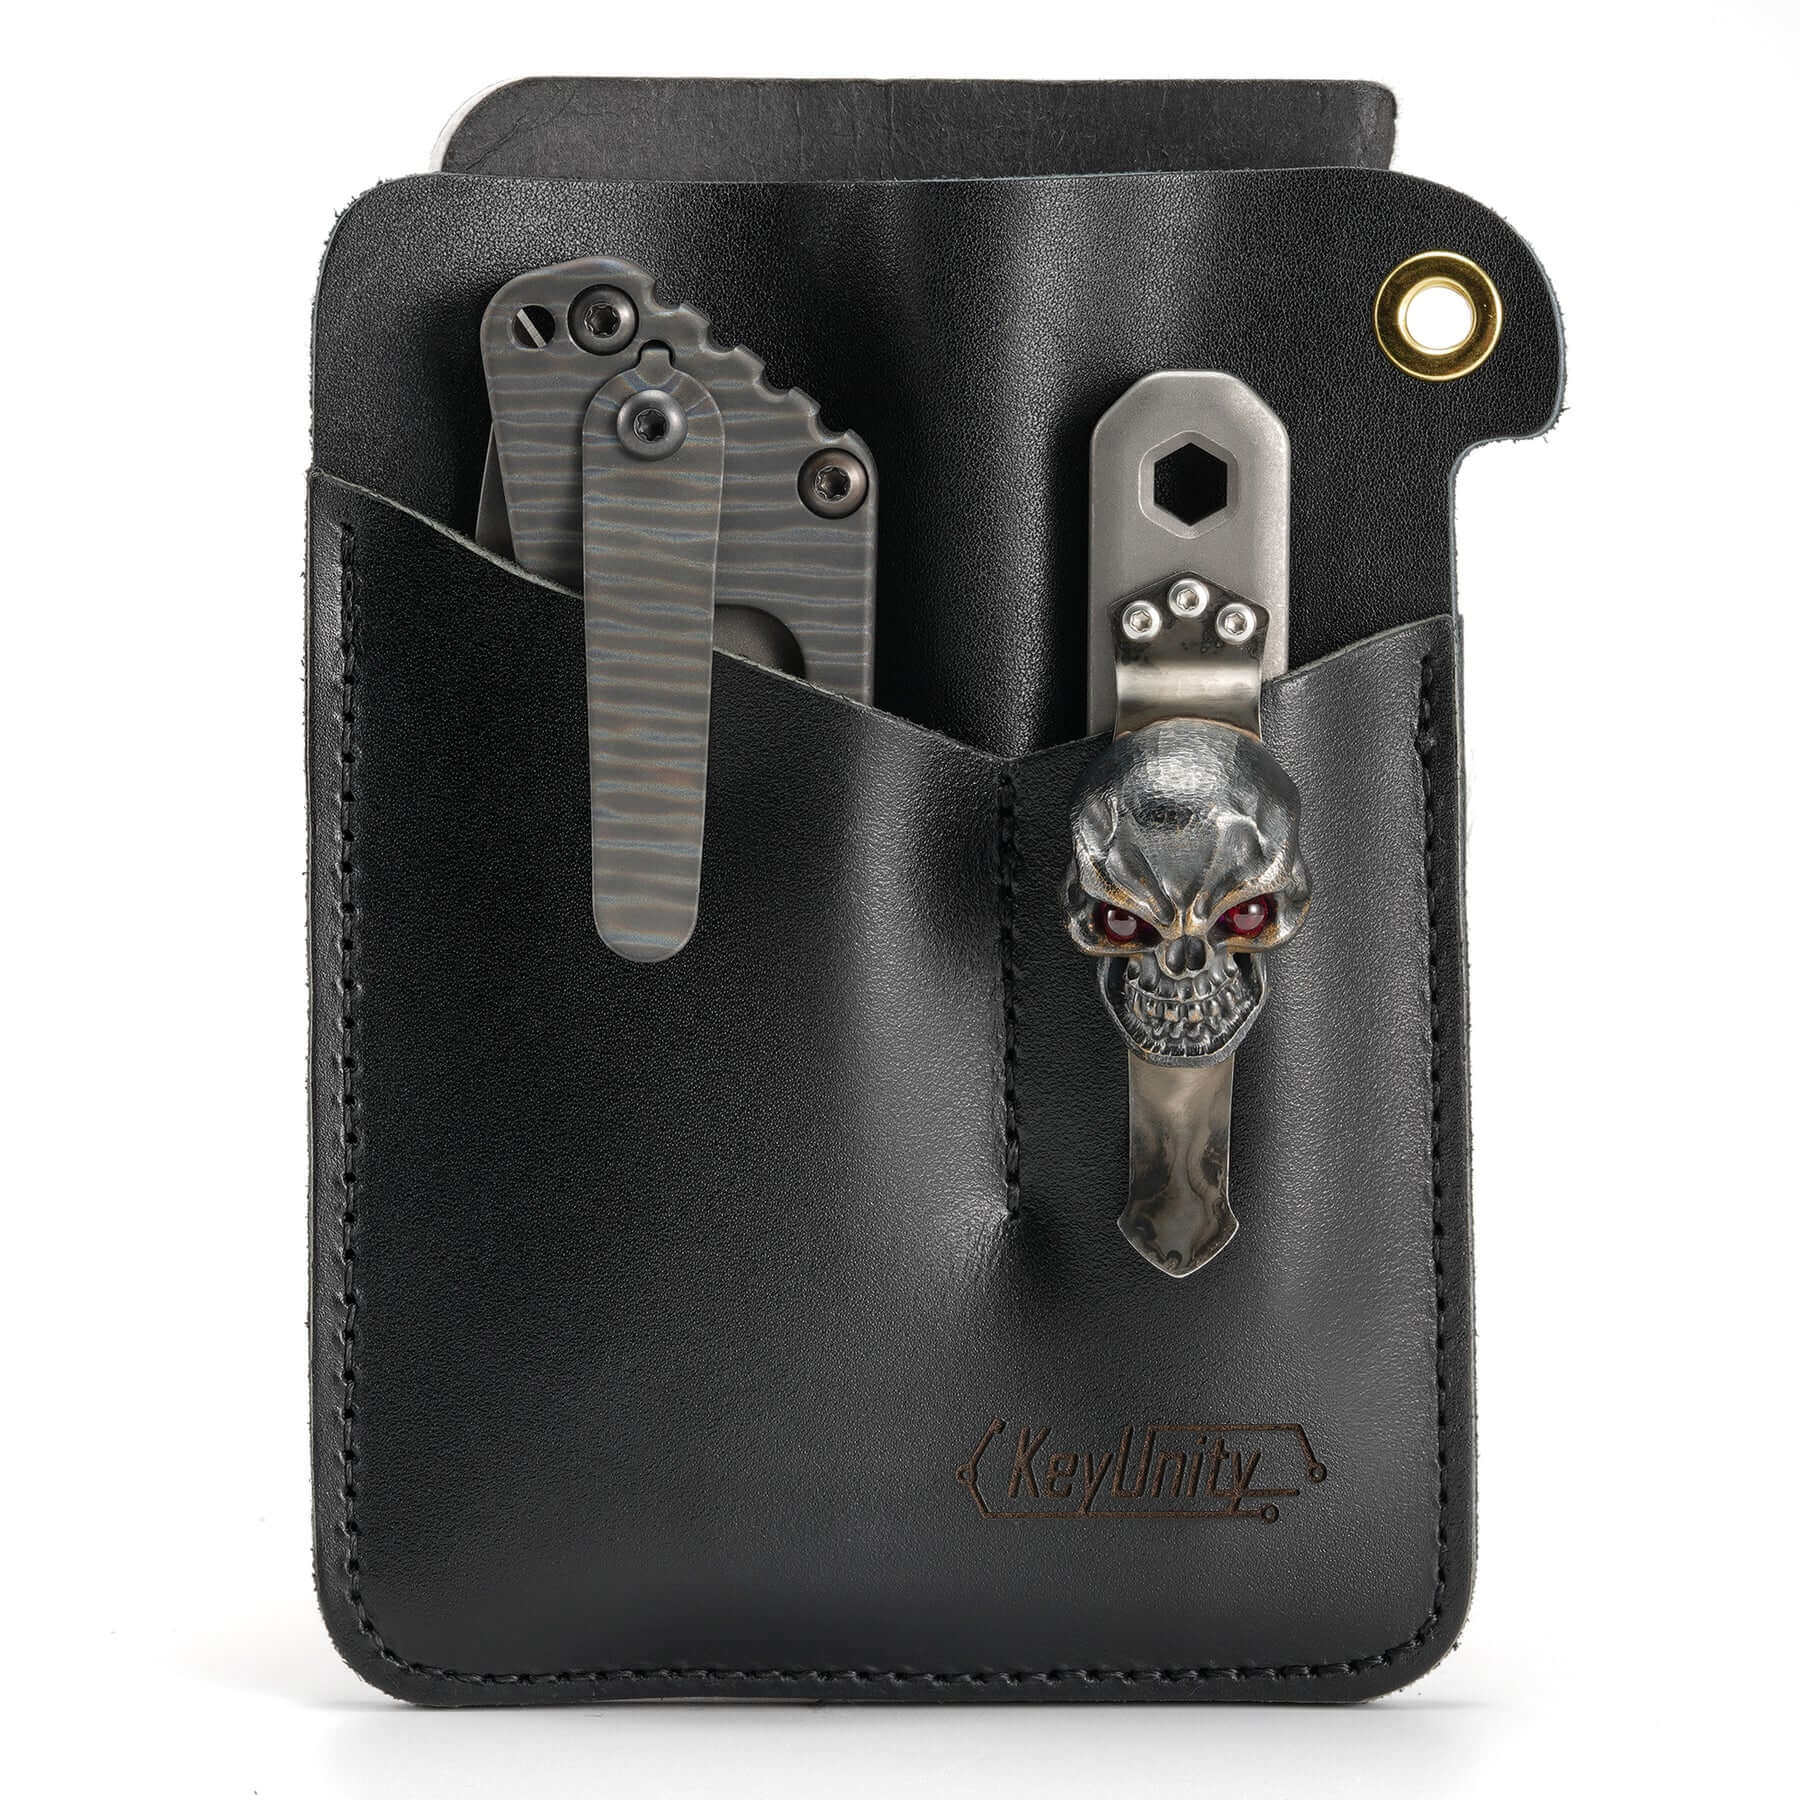 Case Mini Pocket Sharpener, Nylon Sheath